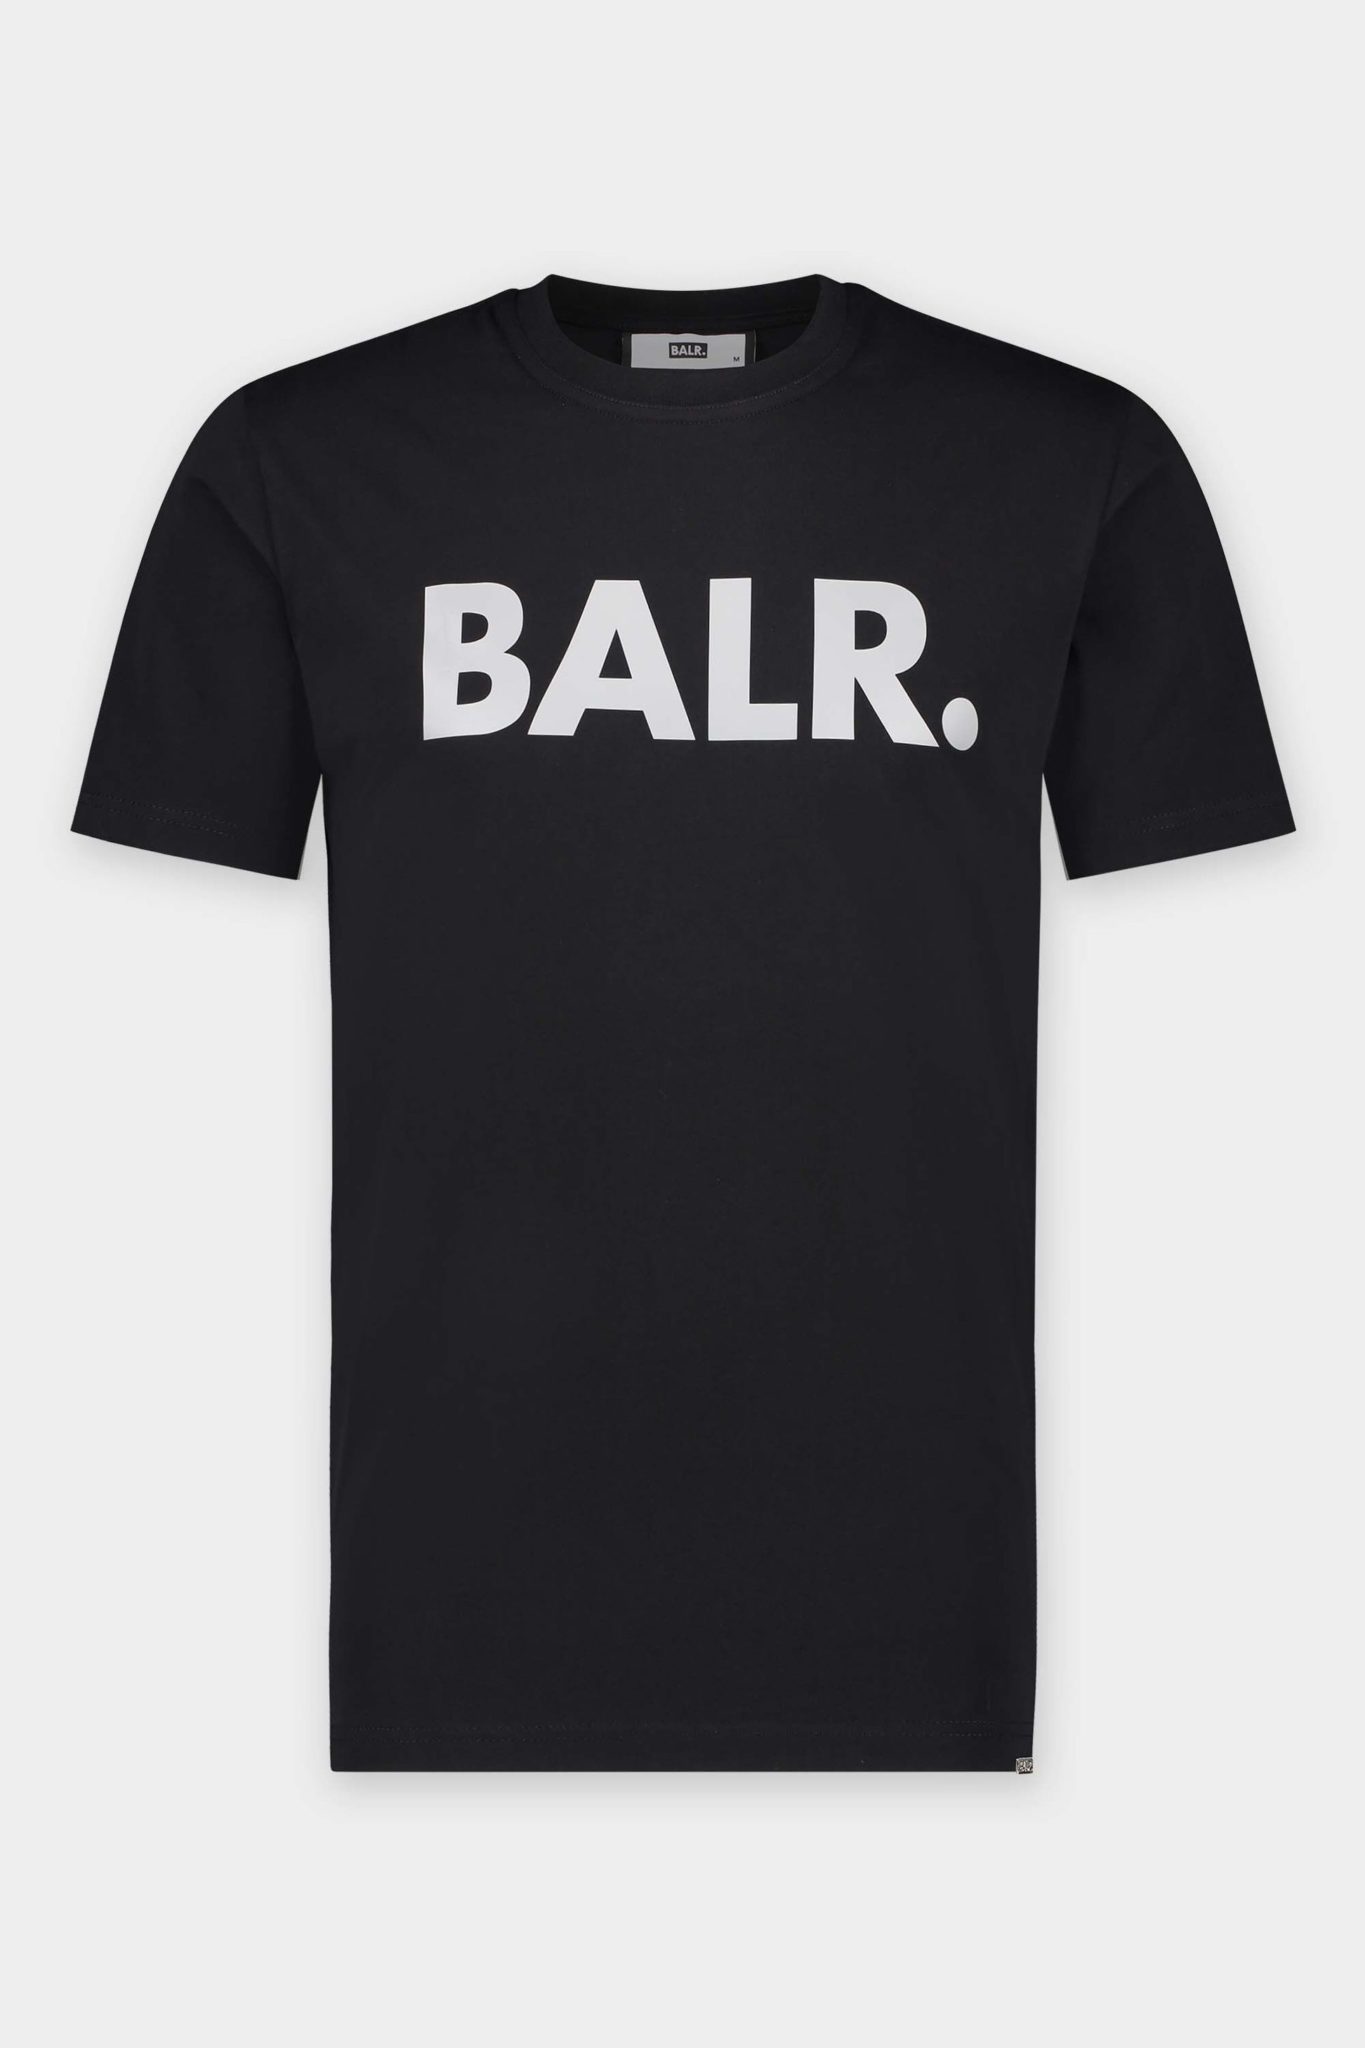 BALR - brand straight - חנות מותגים אונליין לבגדי מותגים בחדרה - הכי בעיר